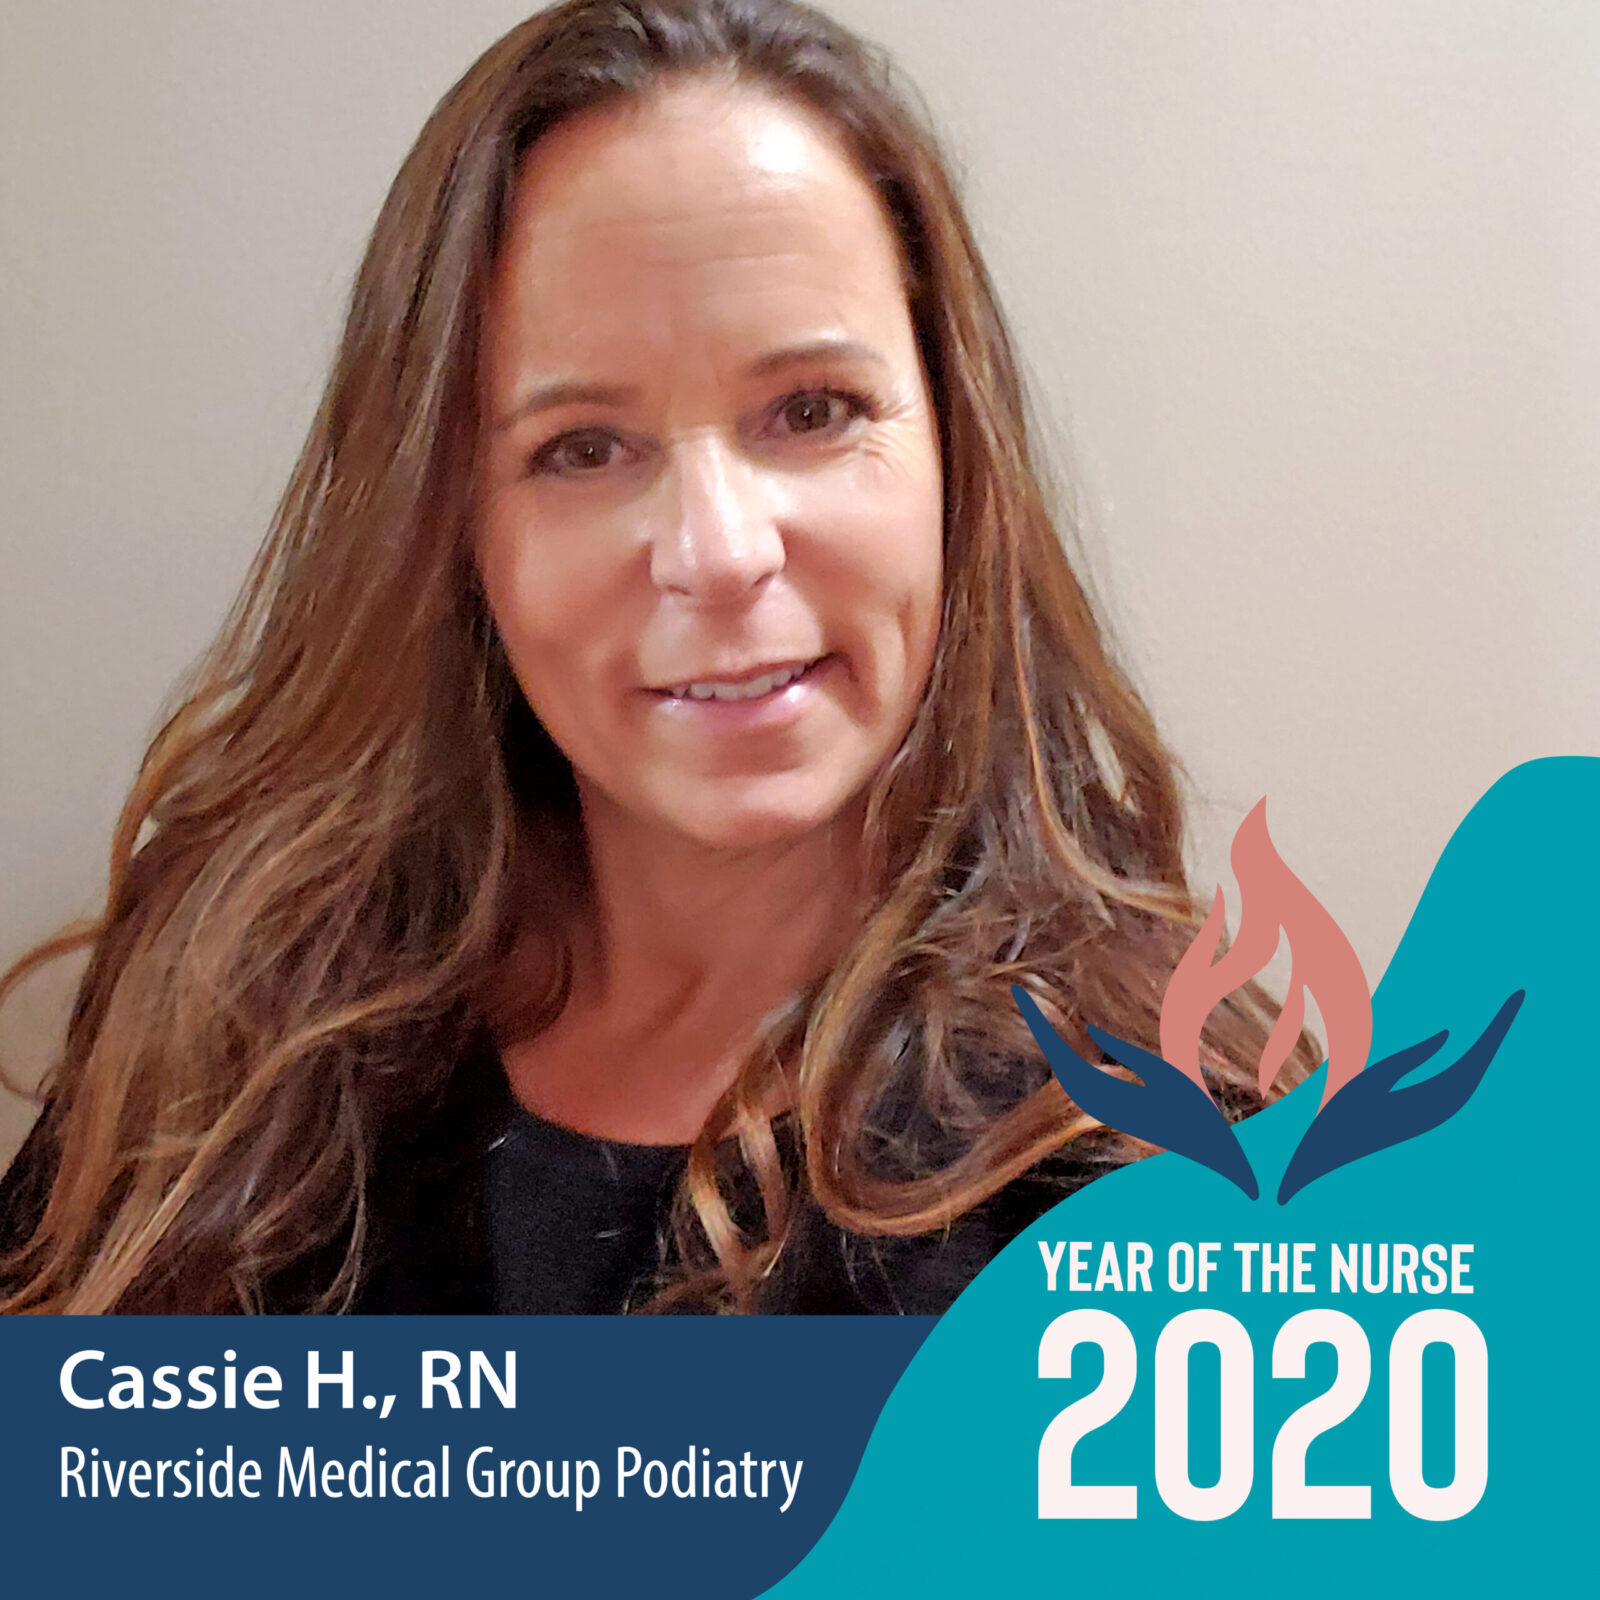 Year of the Nurse Nominee: Cassie H., RN